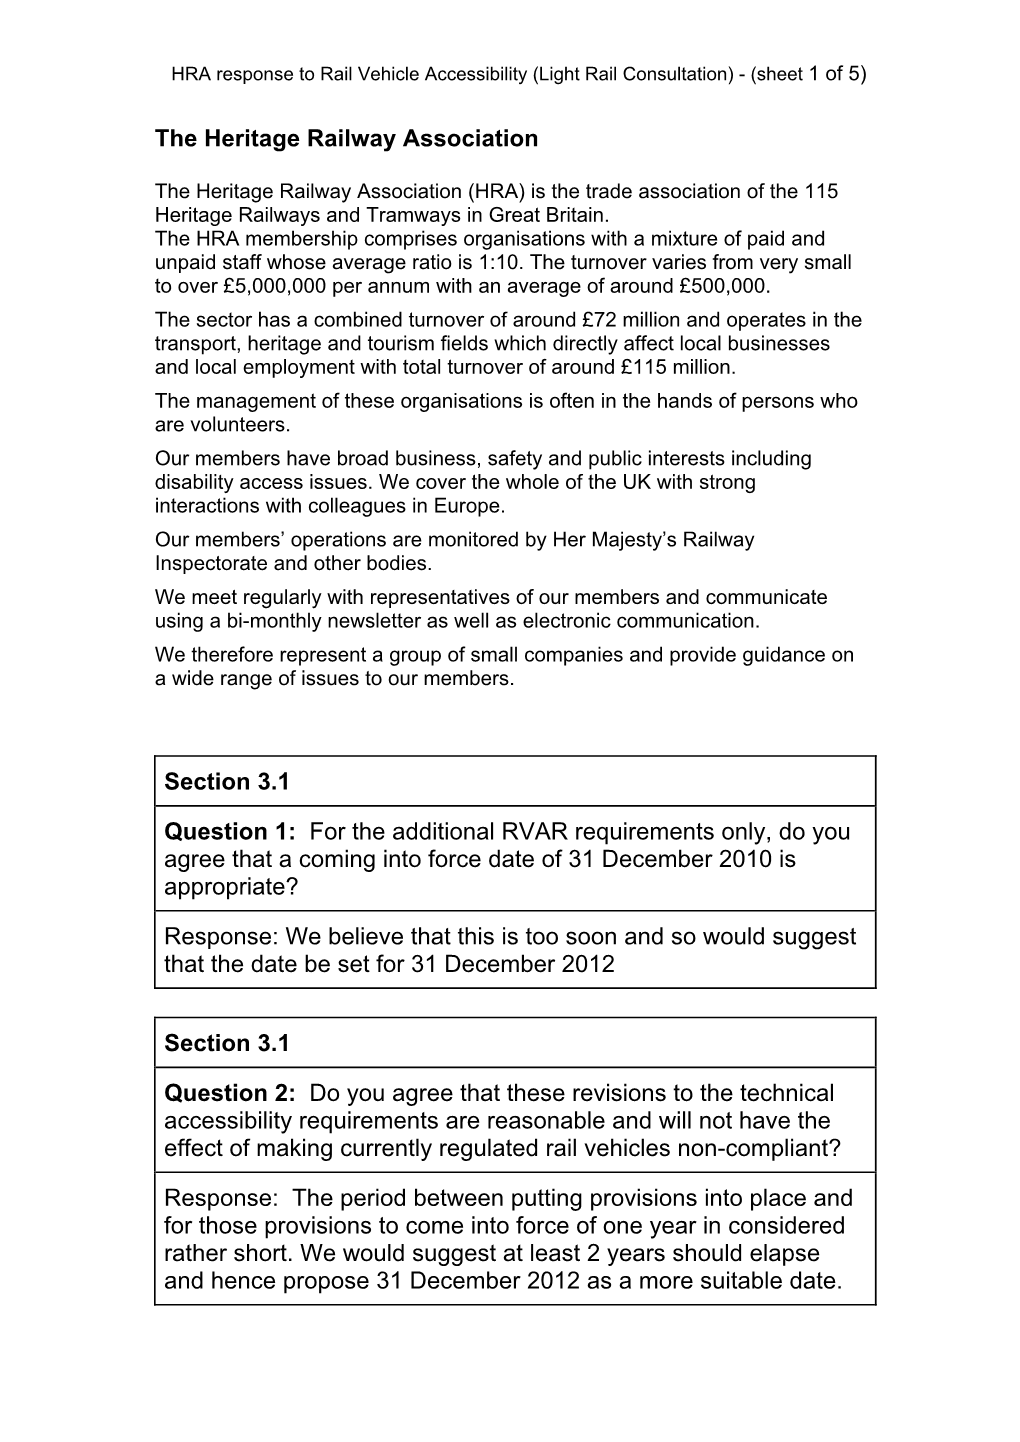 Rail Vehicle Accessibility (Light Rail Consultation) - (Sheet 1 of 5)